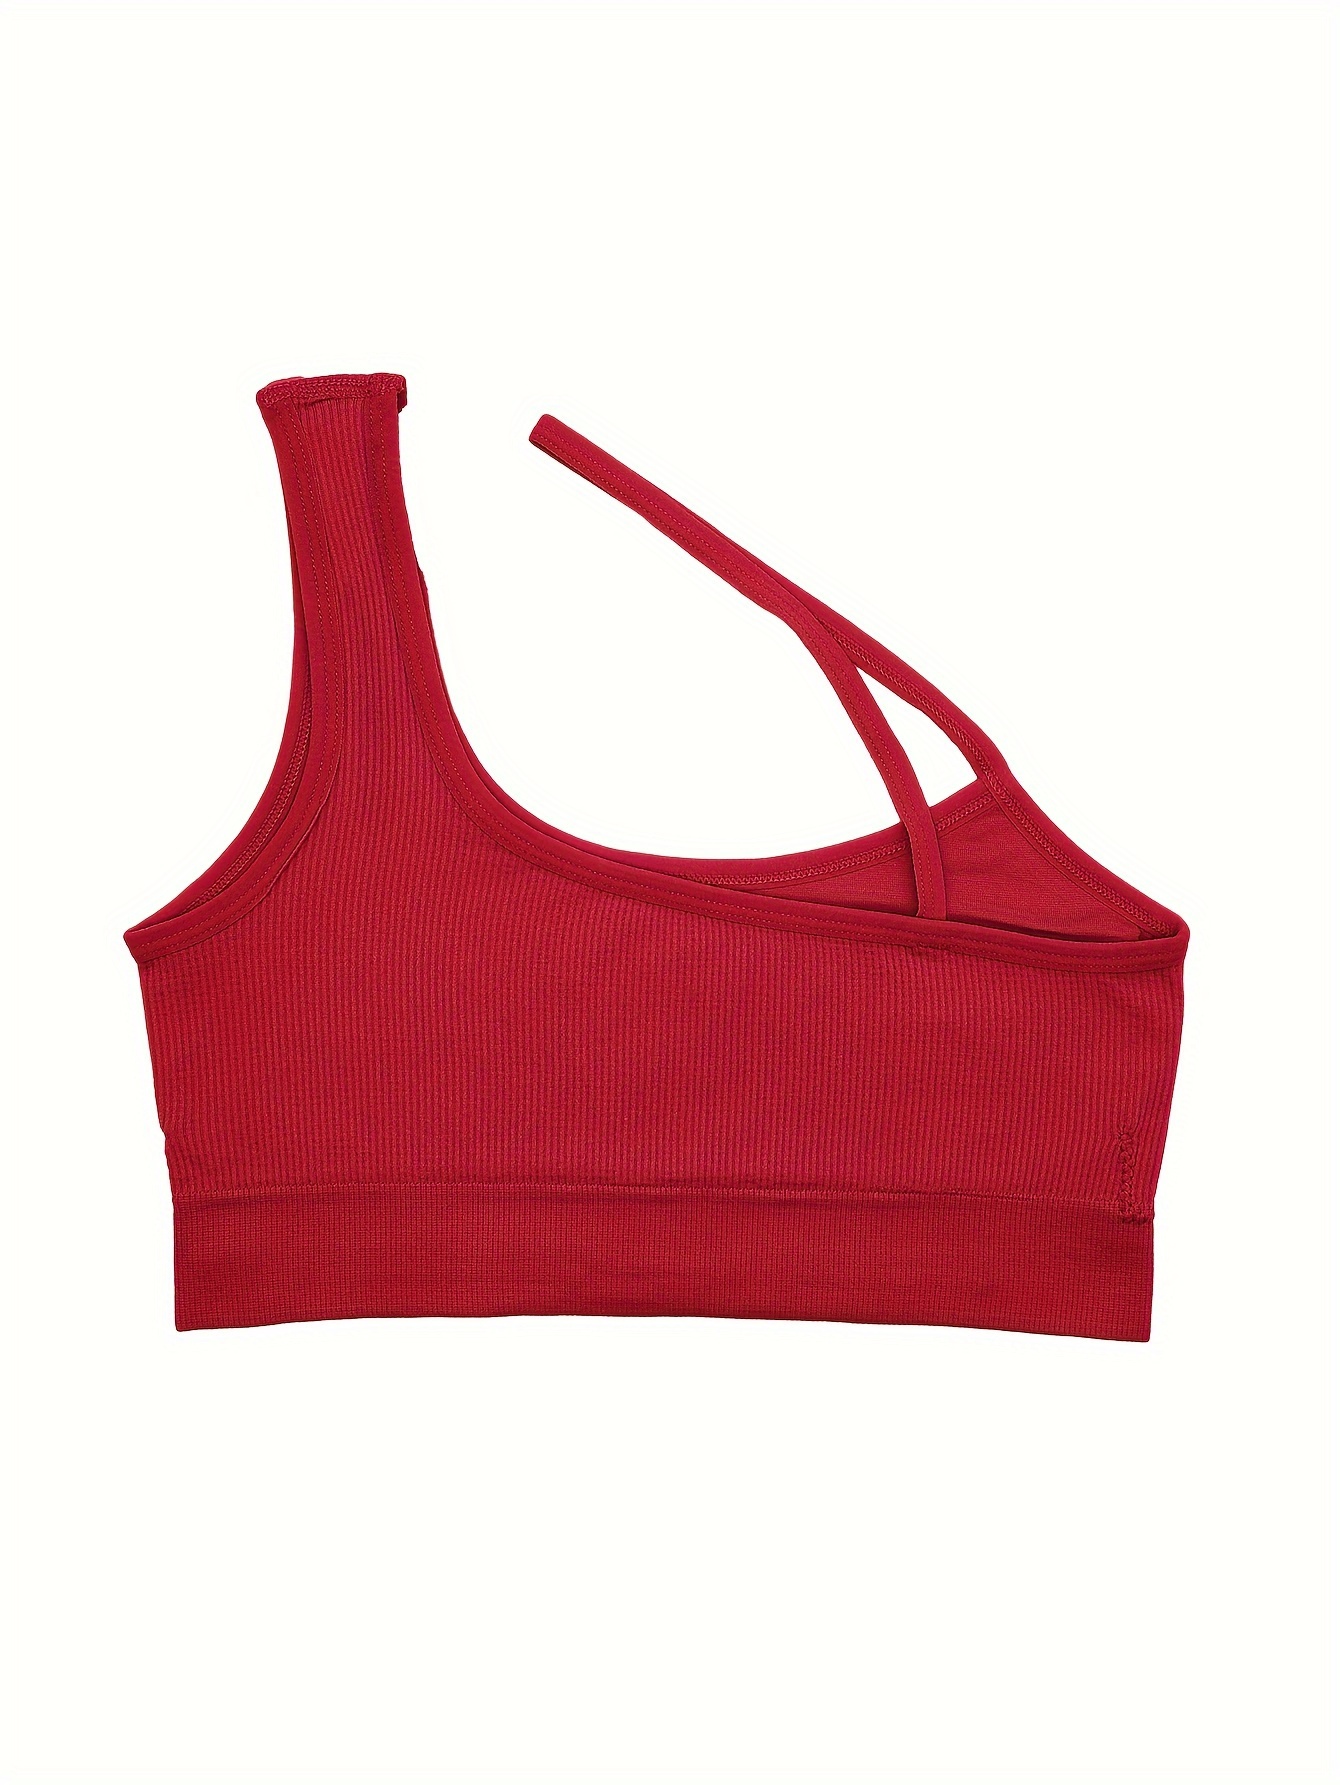 One Shoulder Strap Sports Bra, Comfy & Breathable Yoga Fitness Bra, Women's  Lingerie & Underwear